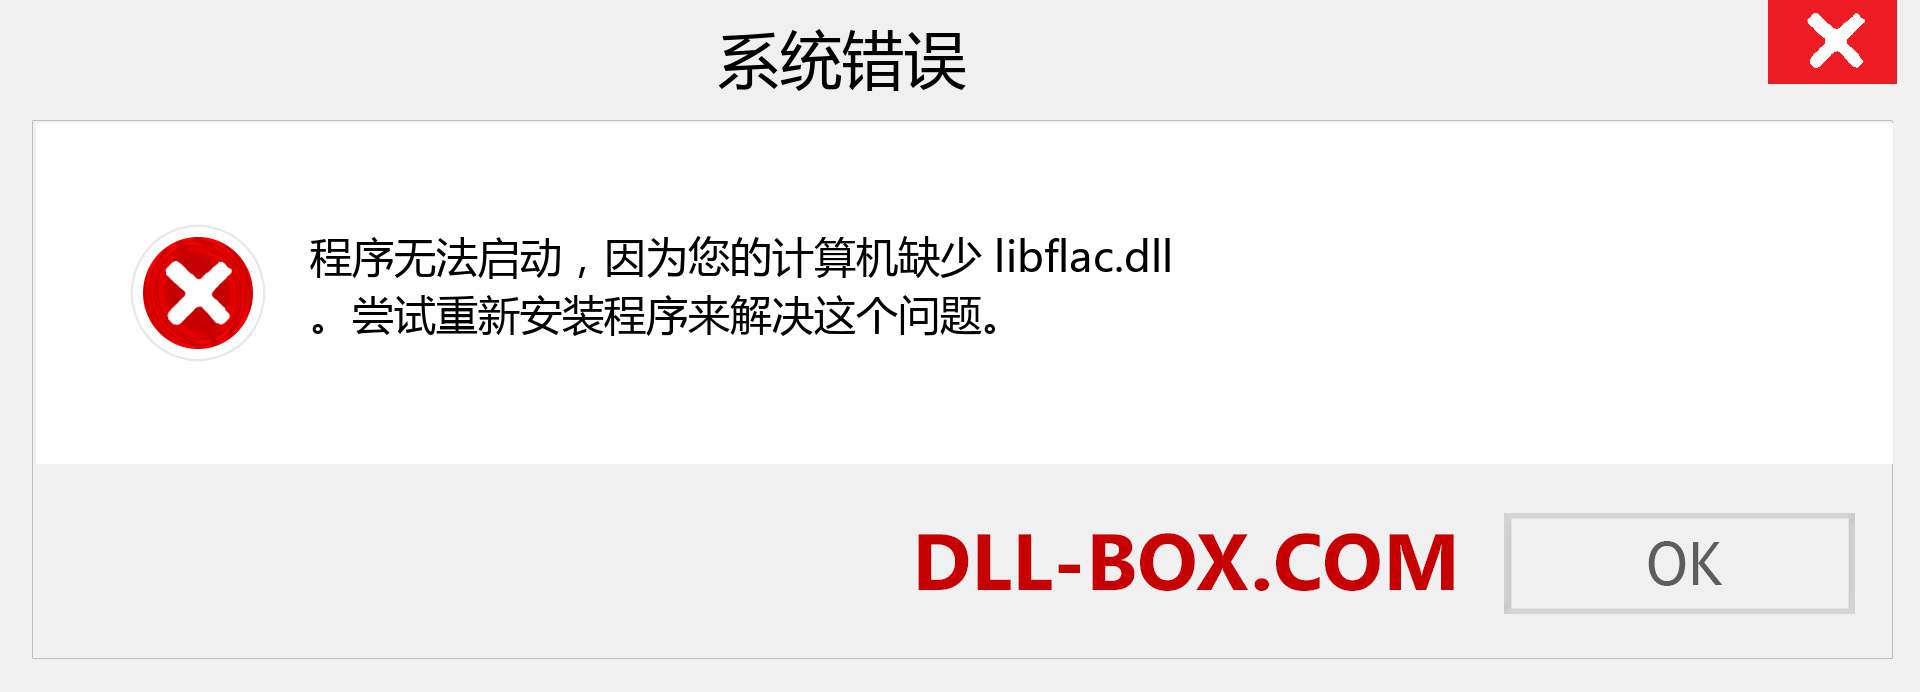 libflac.dll 文件丢失？。 适用于 Windows 7、8、10 的下载 - 修复 Windows、照片、图像上的 libflac dll 丢失错误